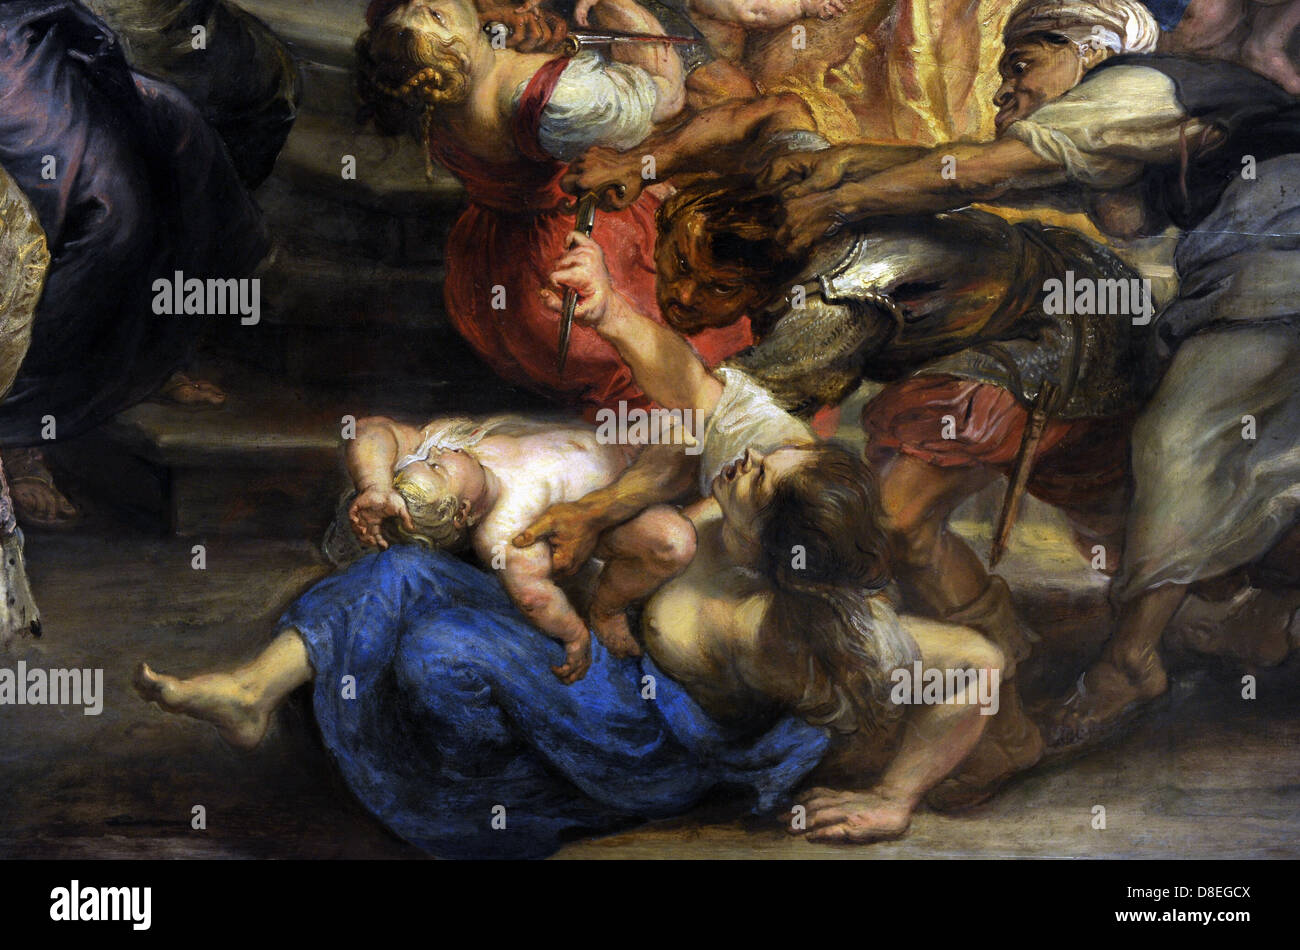 Peter Paul Rubens (1577-1640). German-born Flemish Baroque painter. Massacre of the Innocents, 1635-40. Detail. Stock Photo